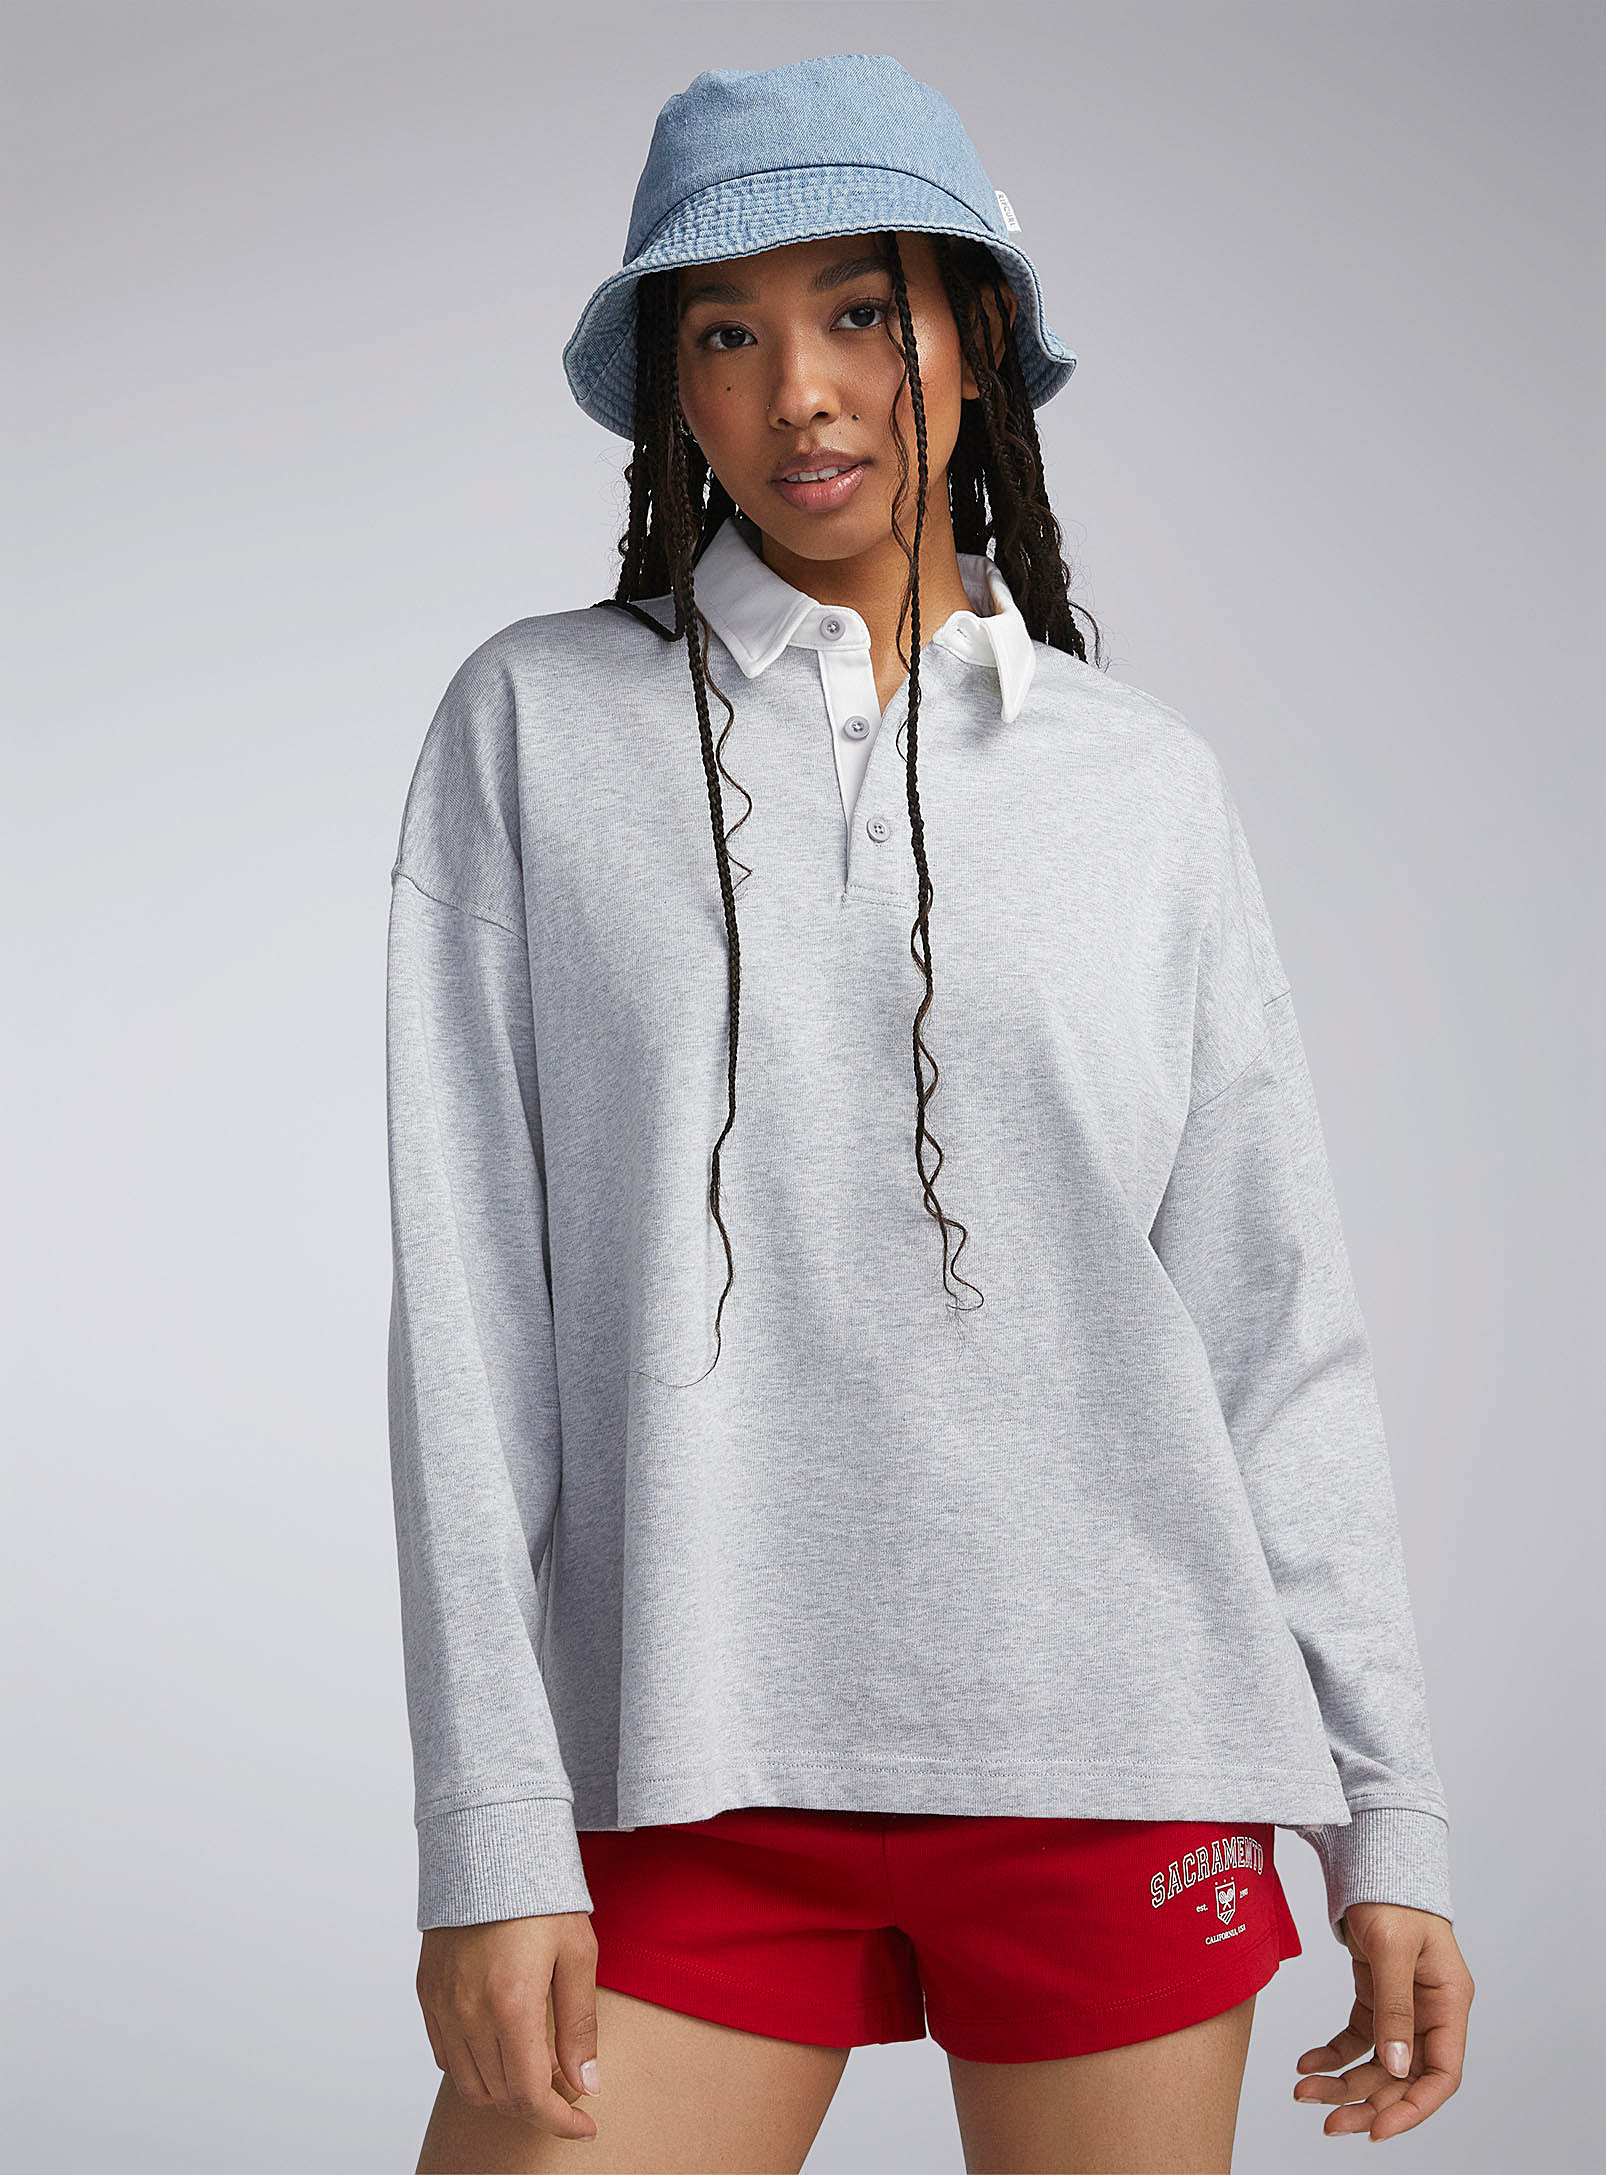 Twik - Women's Contrasting Polo Shirt collar sweatshirt